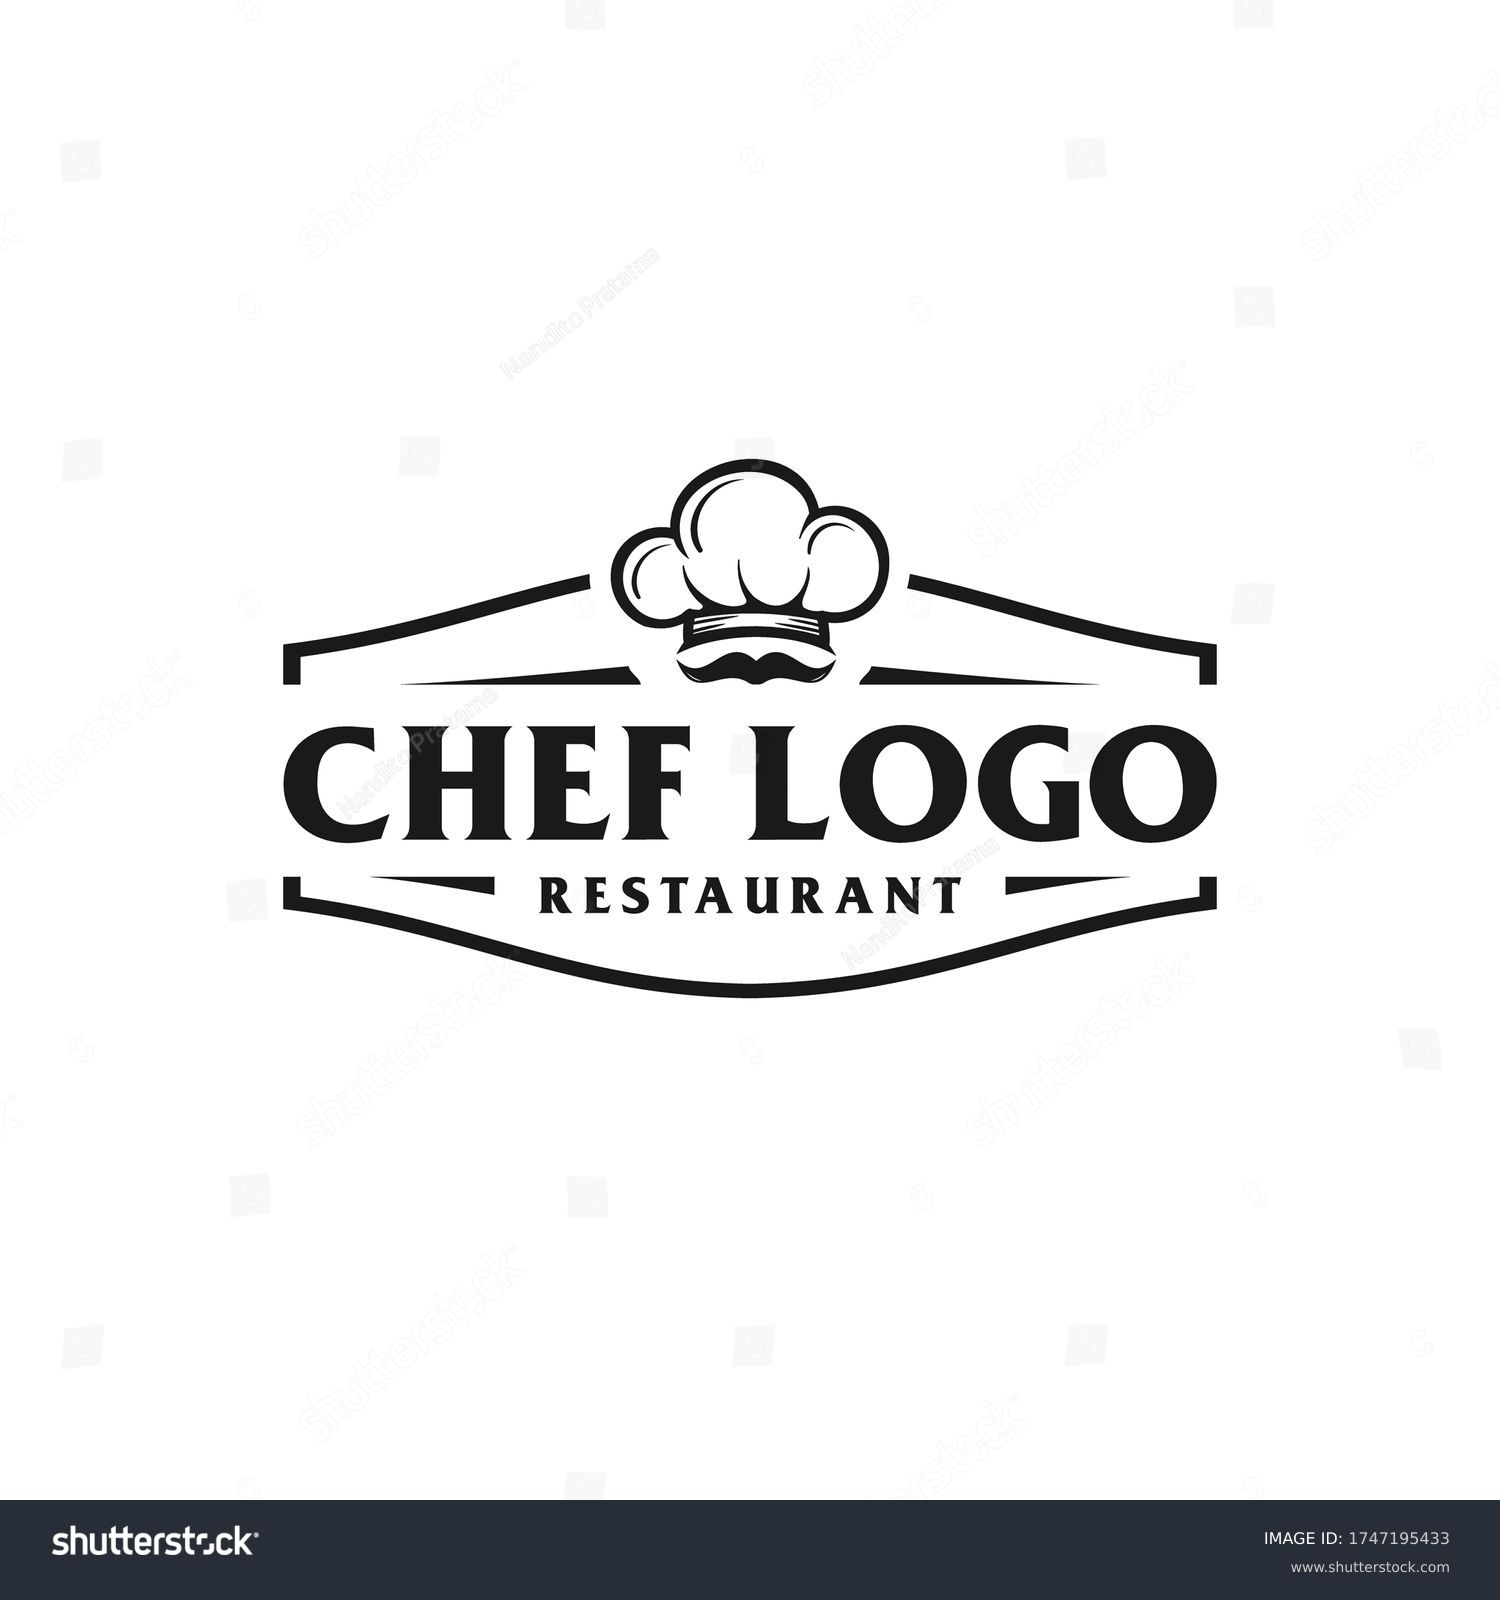 Cook-logo Images, Stock Photos & Vectors | Shutterstock